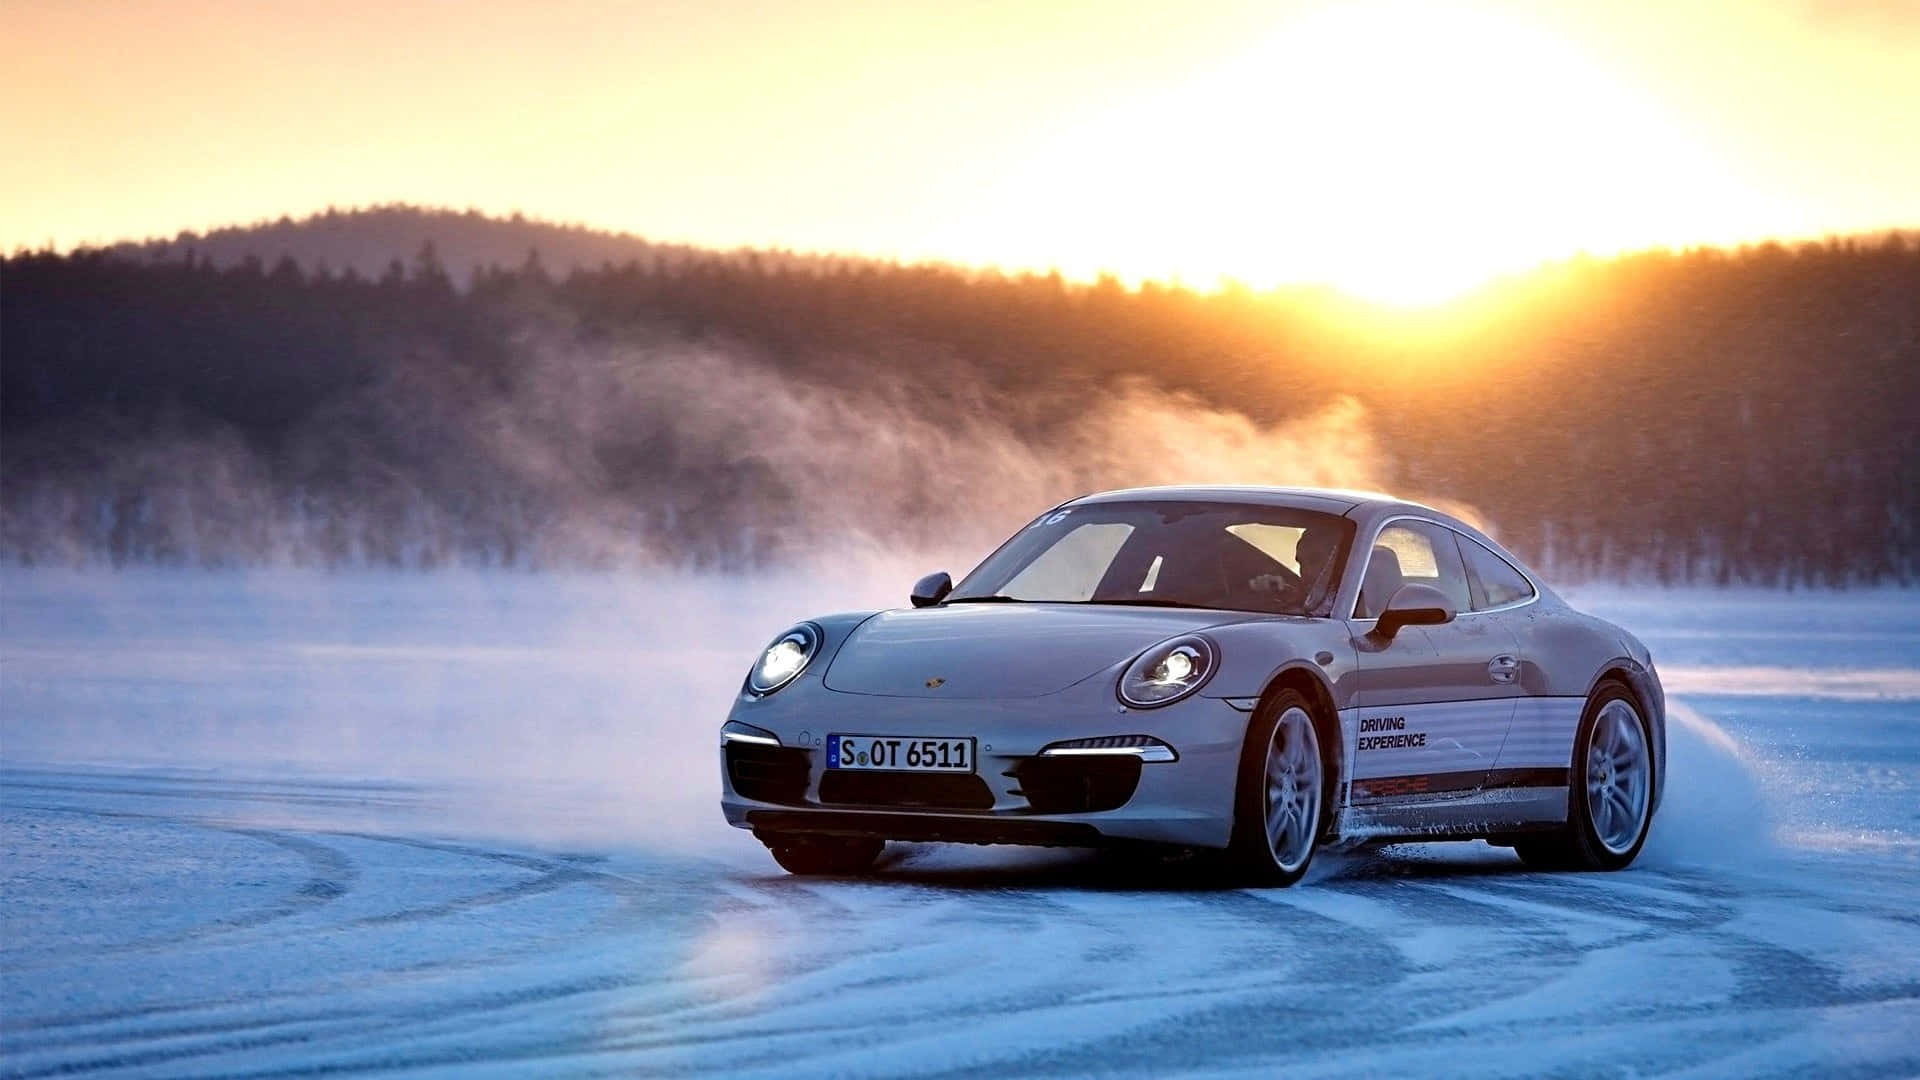 Sleek Porsche Sports Car on Scenic Road